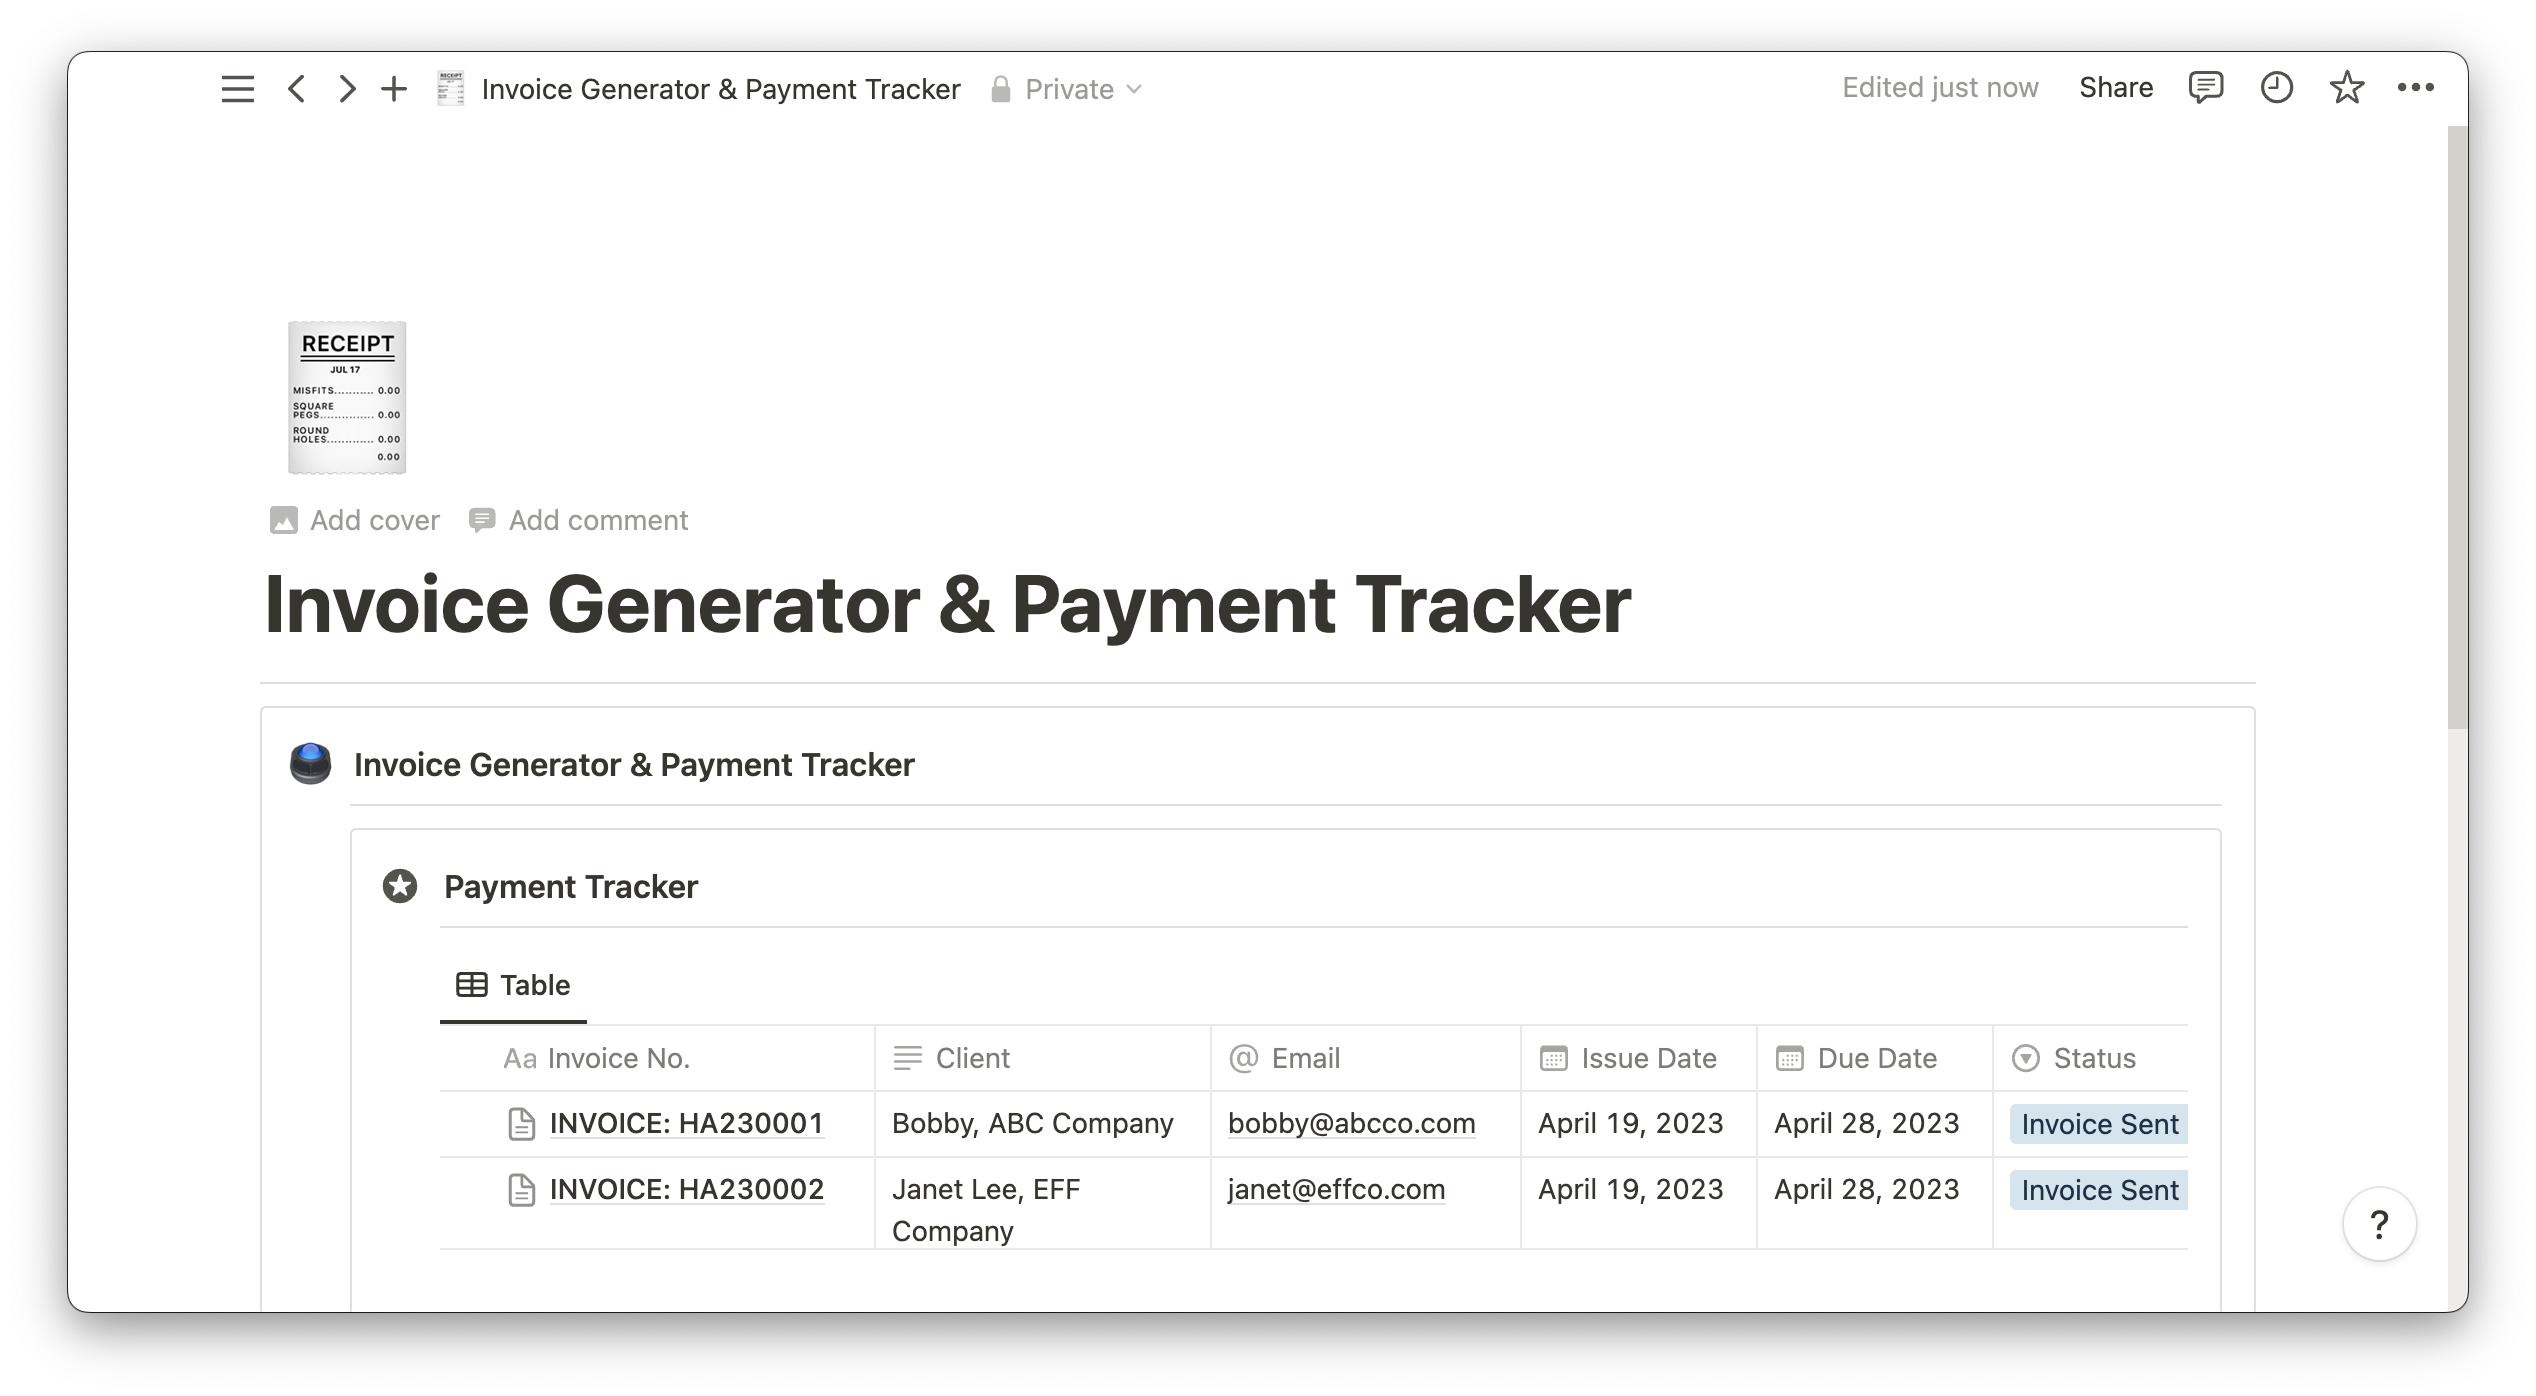 Invoice Generator & Payment Tracker